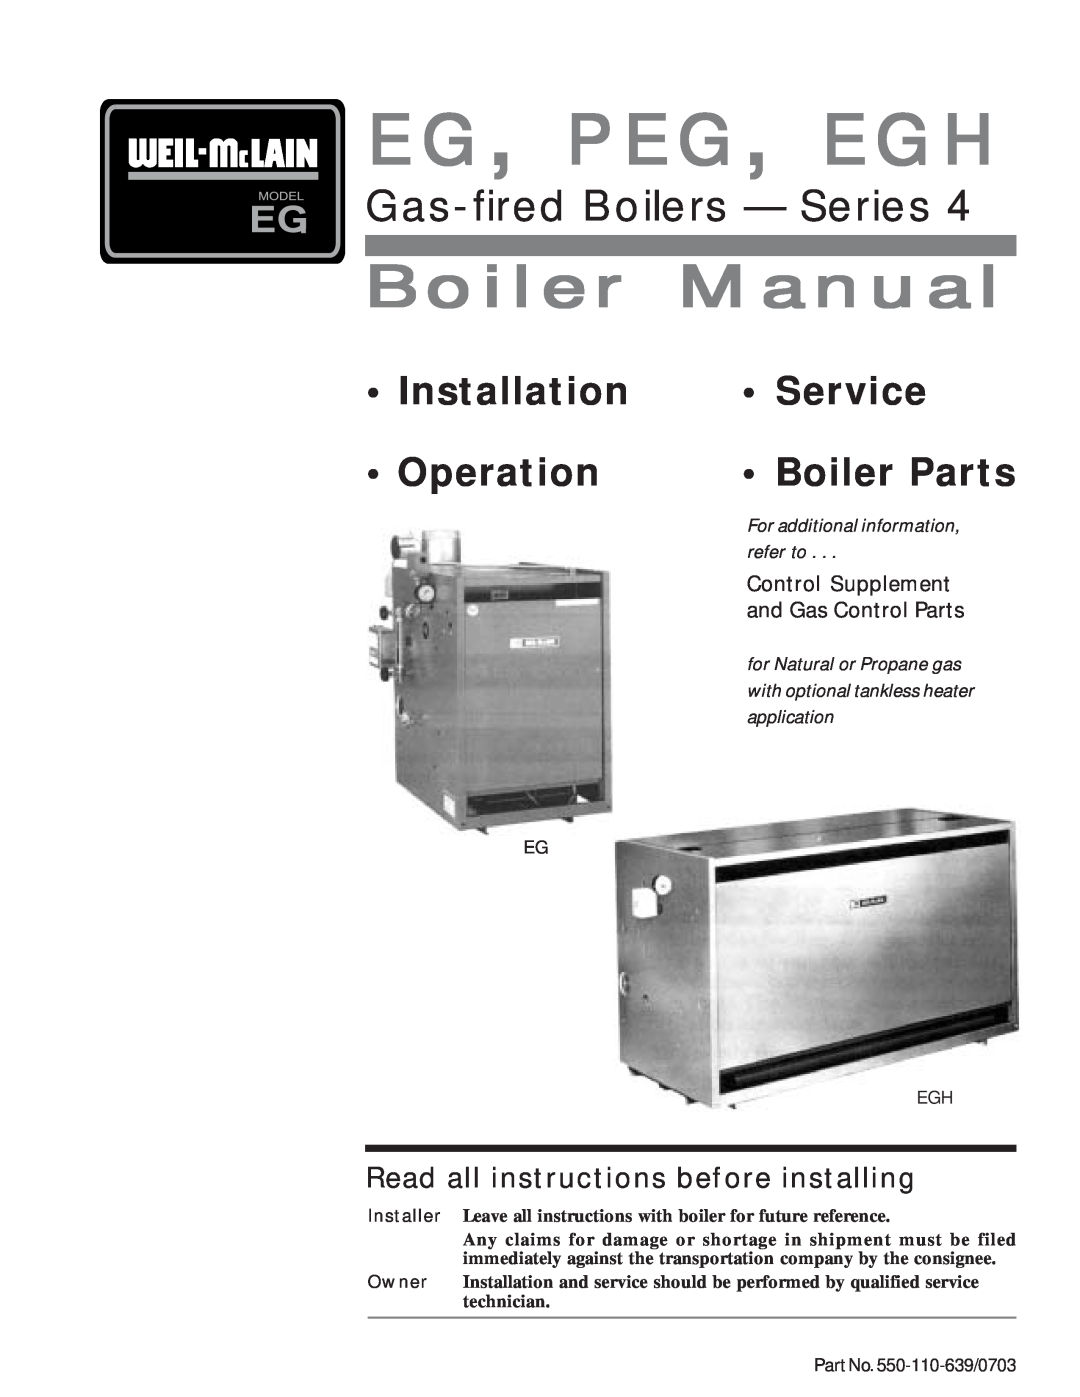 Weil-McLain EG manual Read all instructions before installing, Eg, Peg, Egh, Boiler Manual, Gas-firedBoilers - Series 